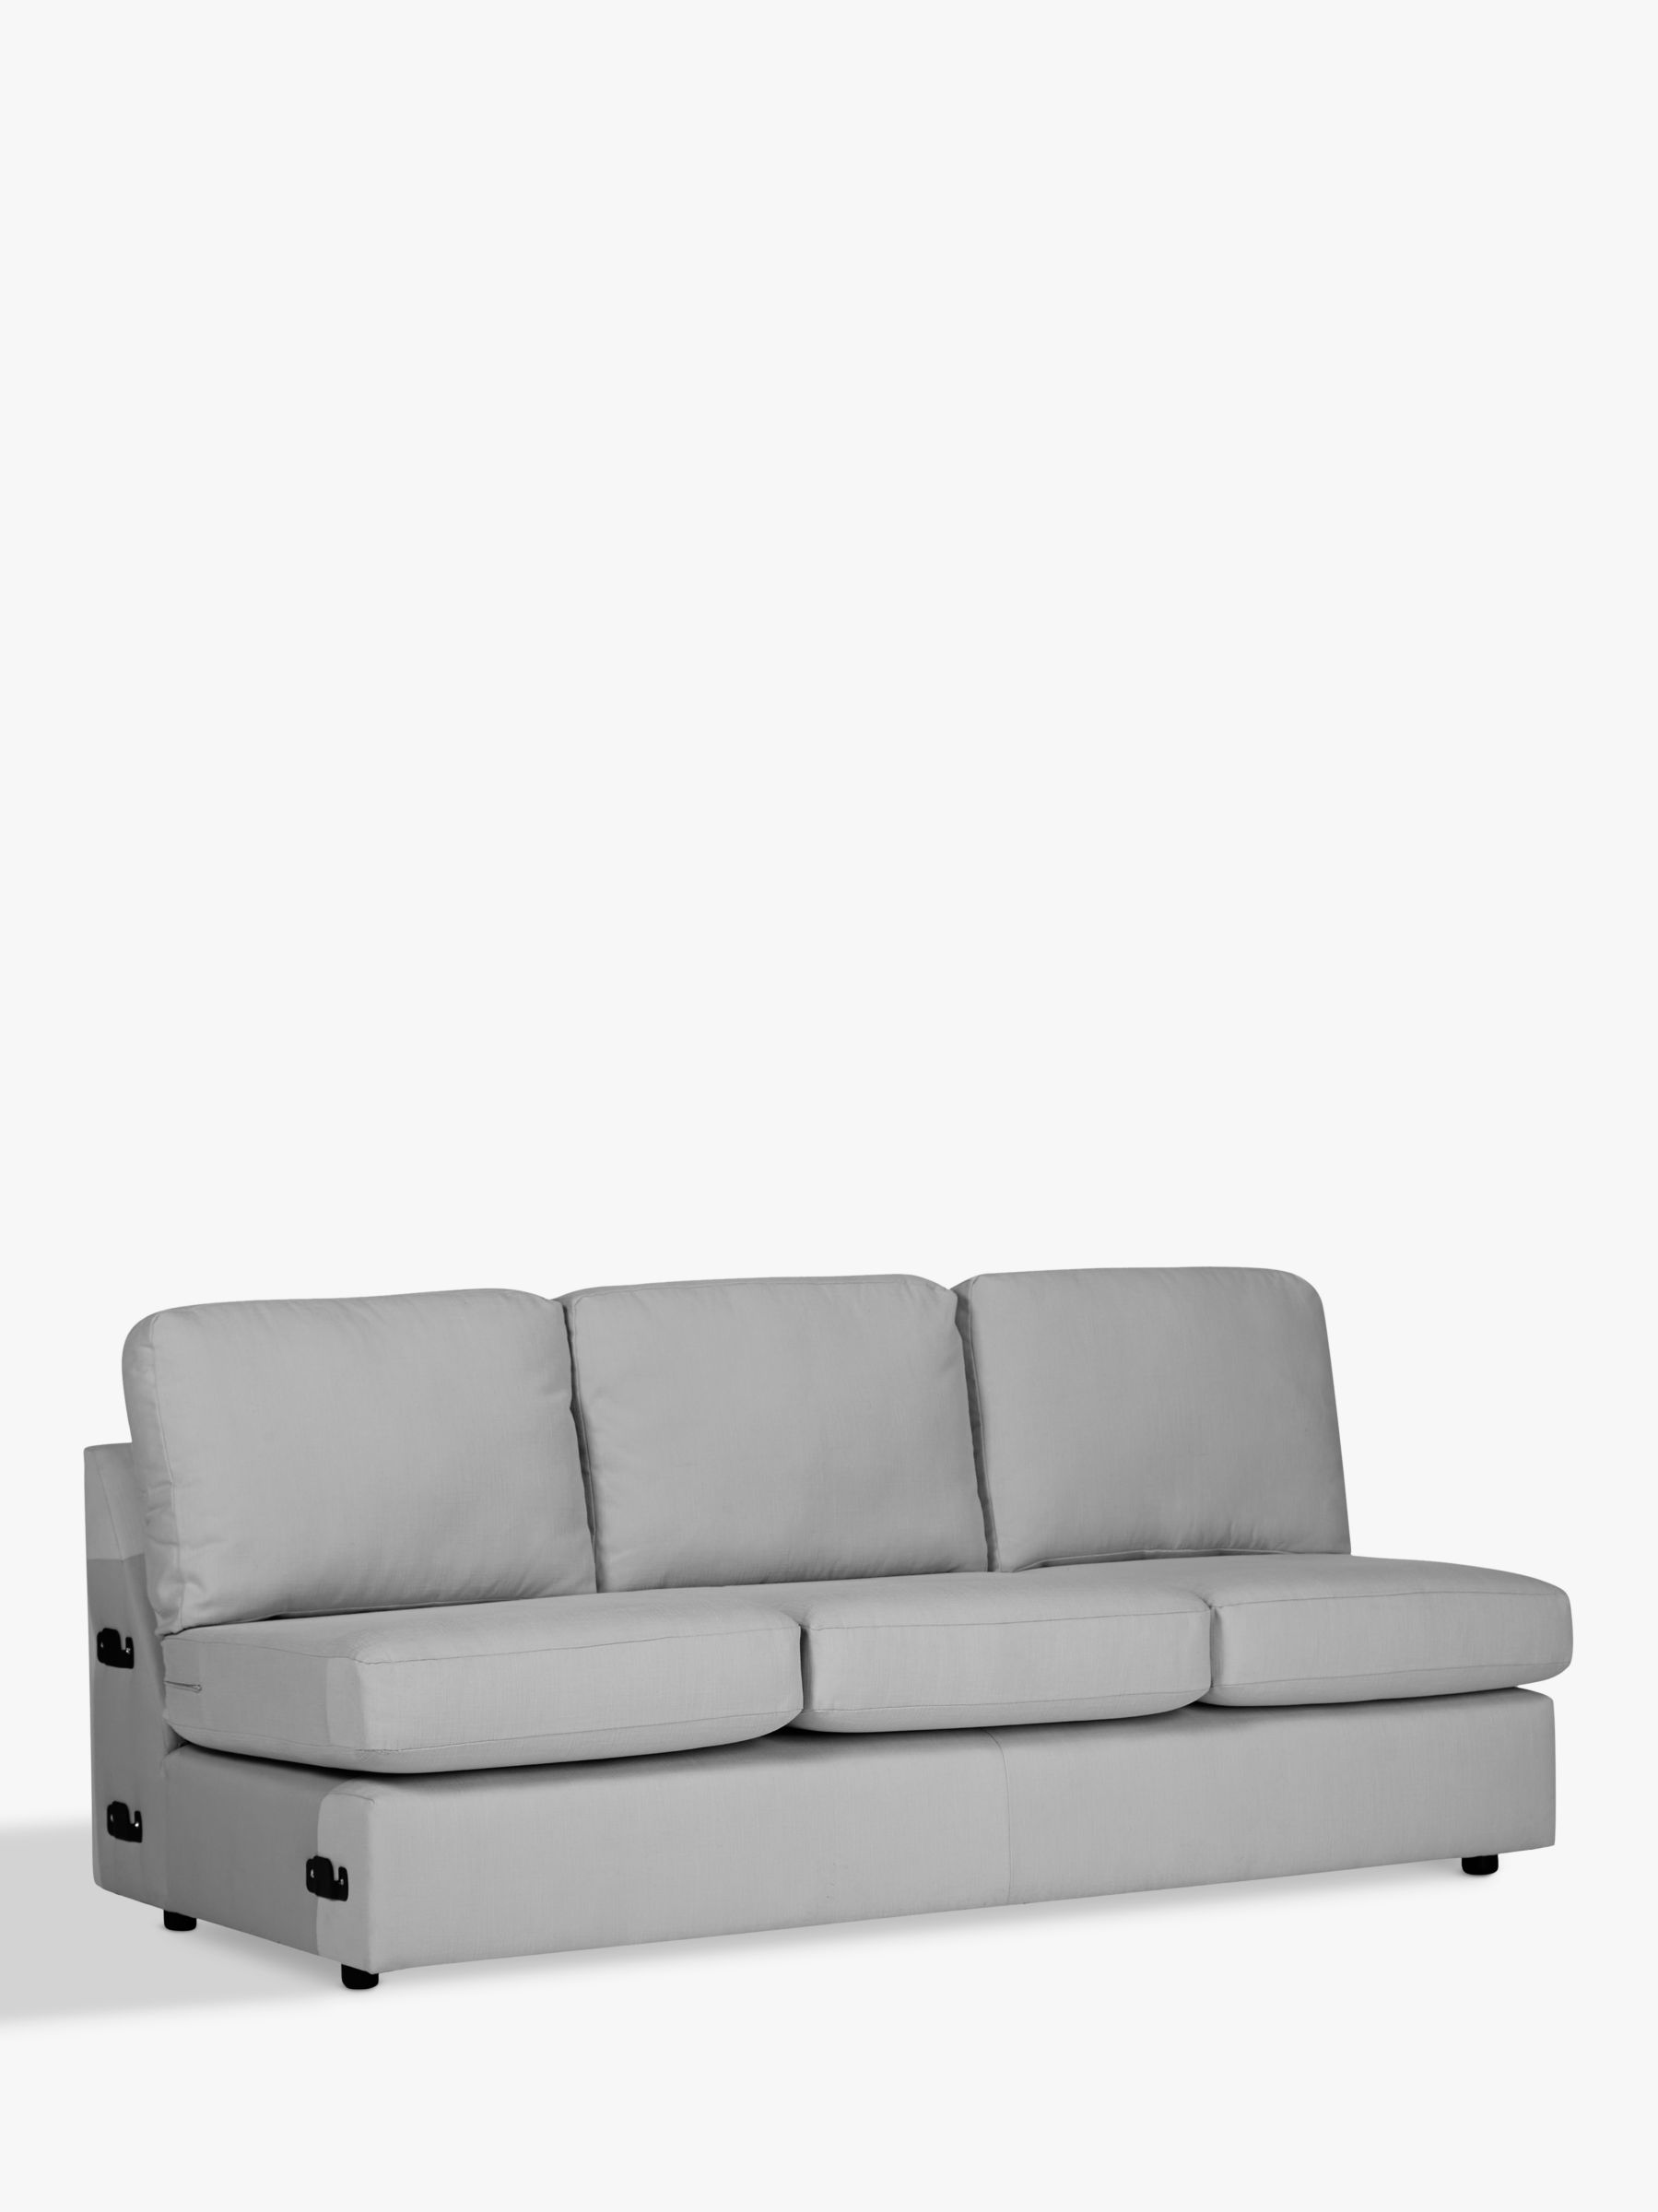 Photo of John lewis oliver modular grand 4 seater armless sofa unit